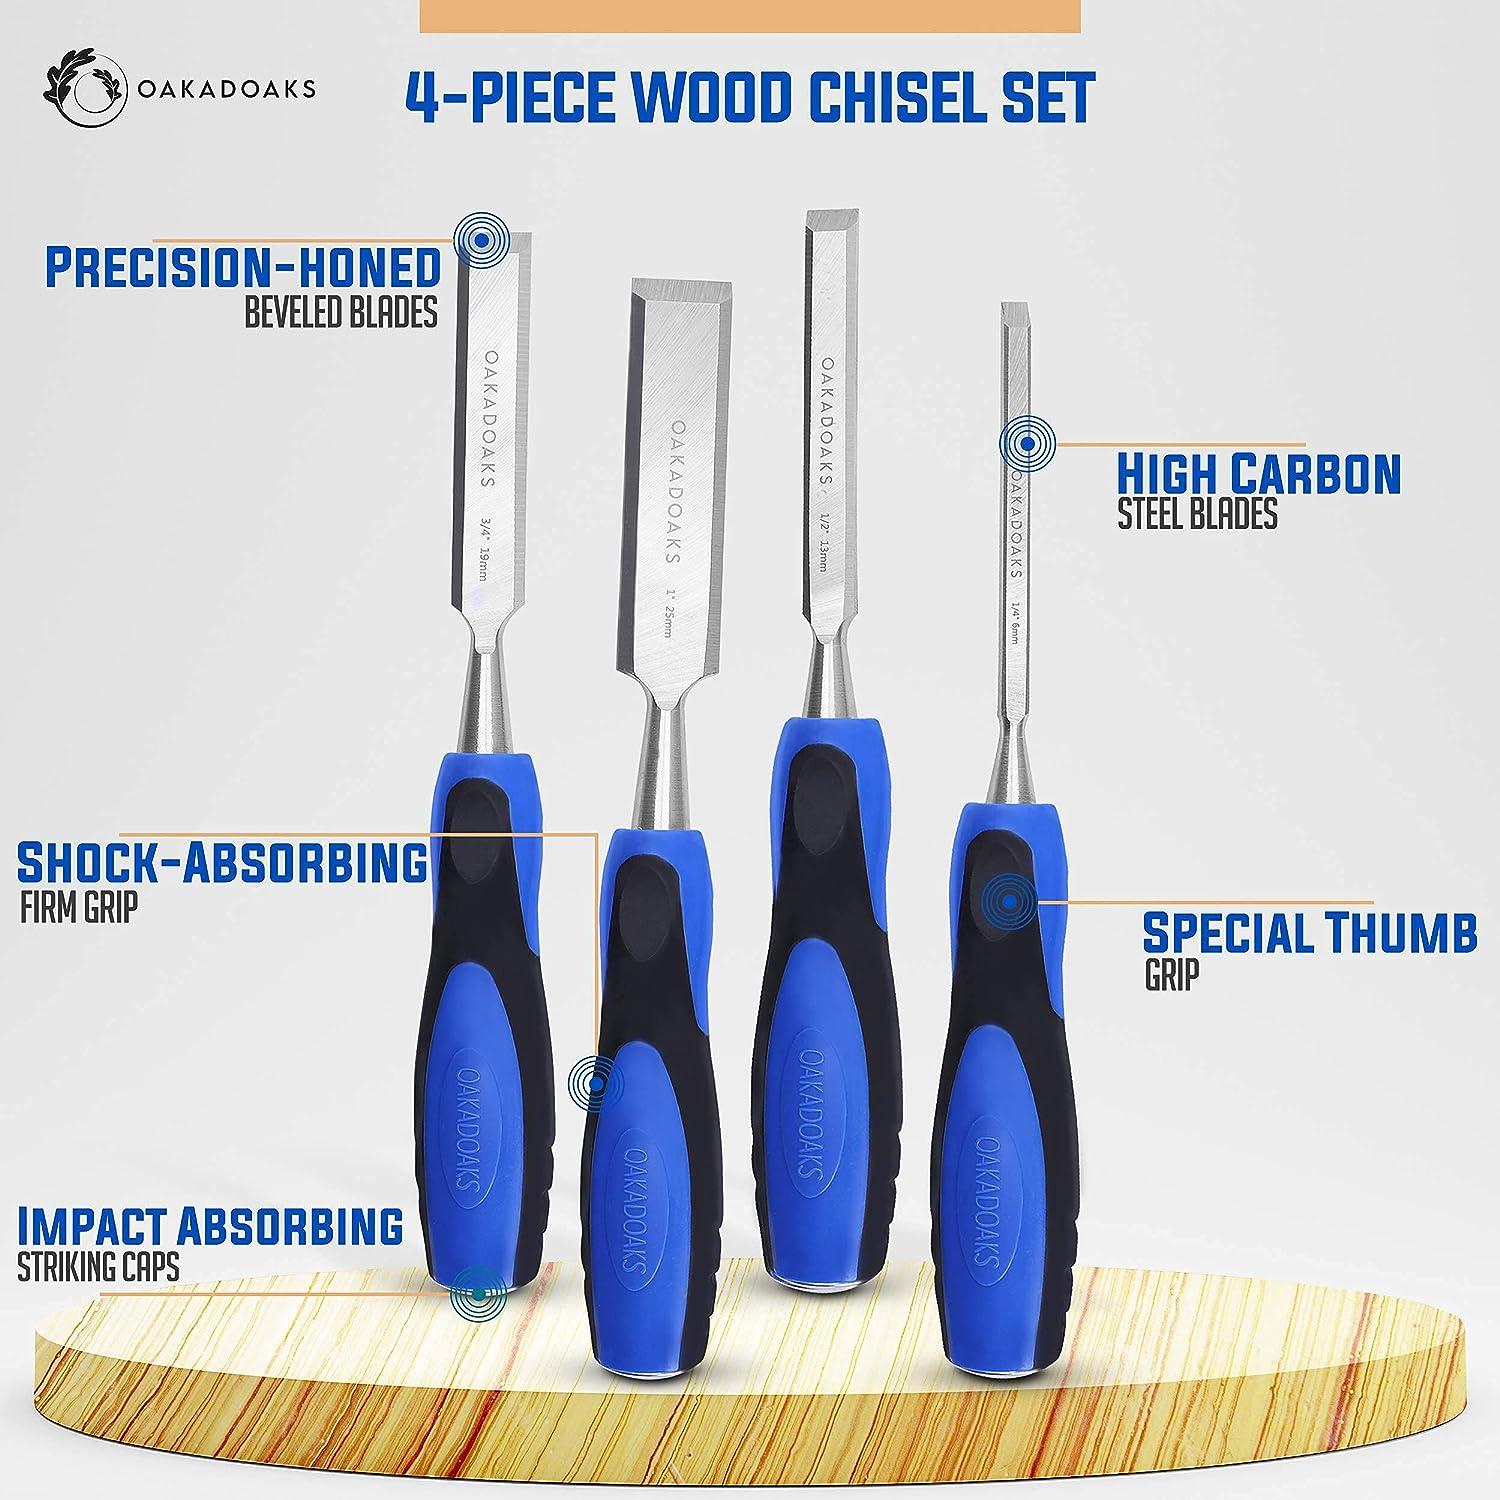 Protoiya 4pcs Wood Chisels Set Sharp Chrome-Vanadium Steel Wood Carving Chisels with Beech Handles Ergonomic Wood Carving Tools for Carpentry